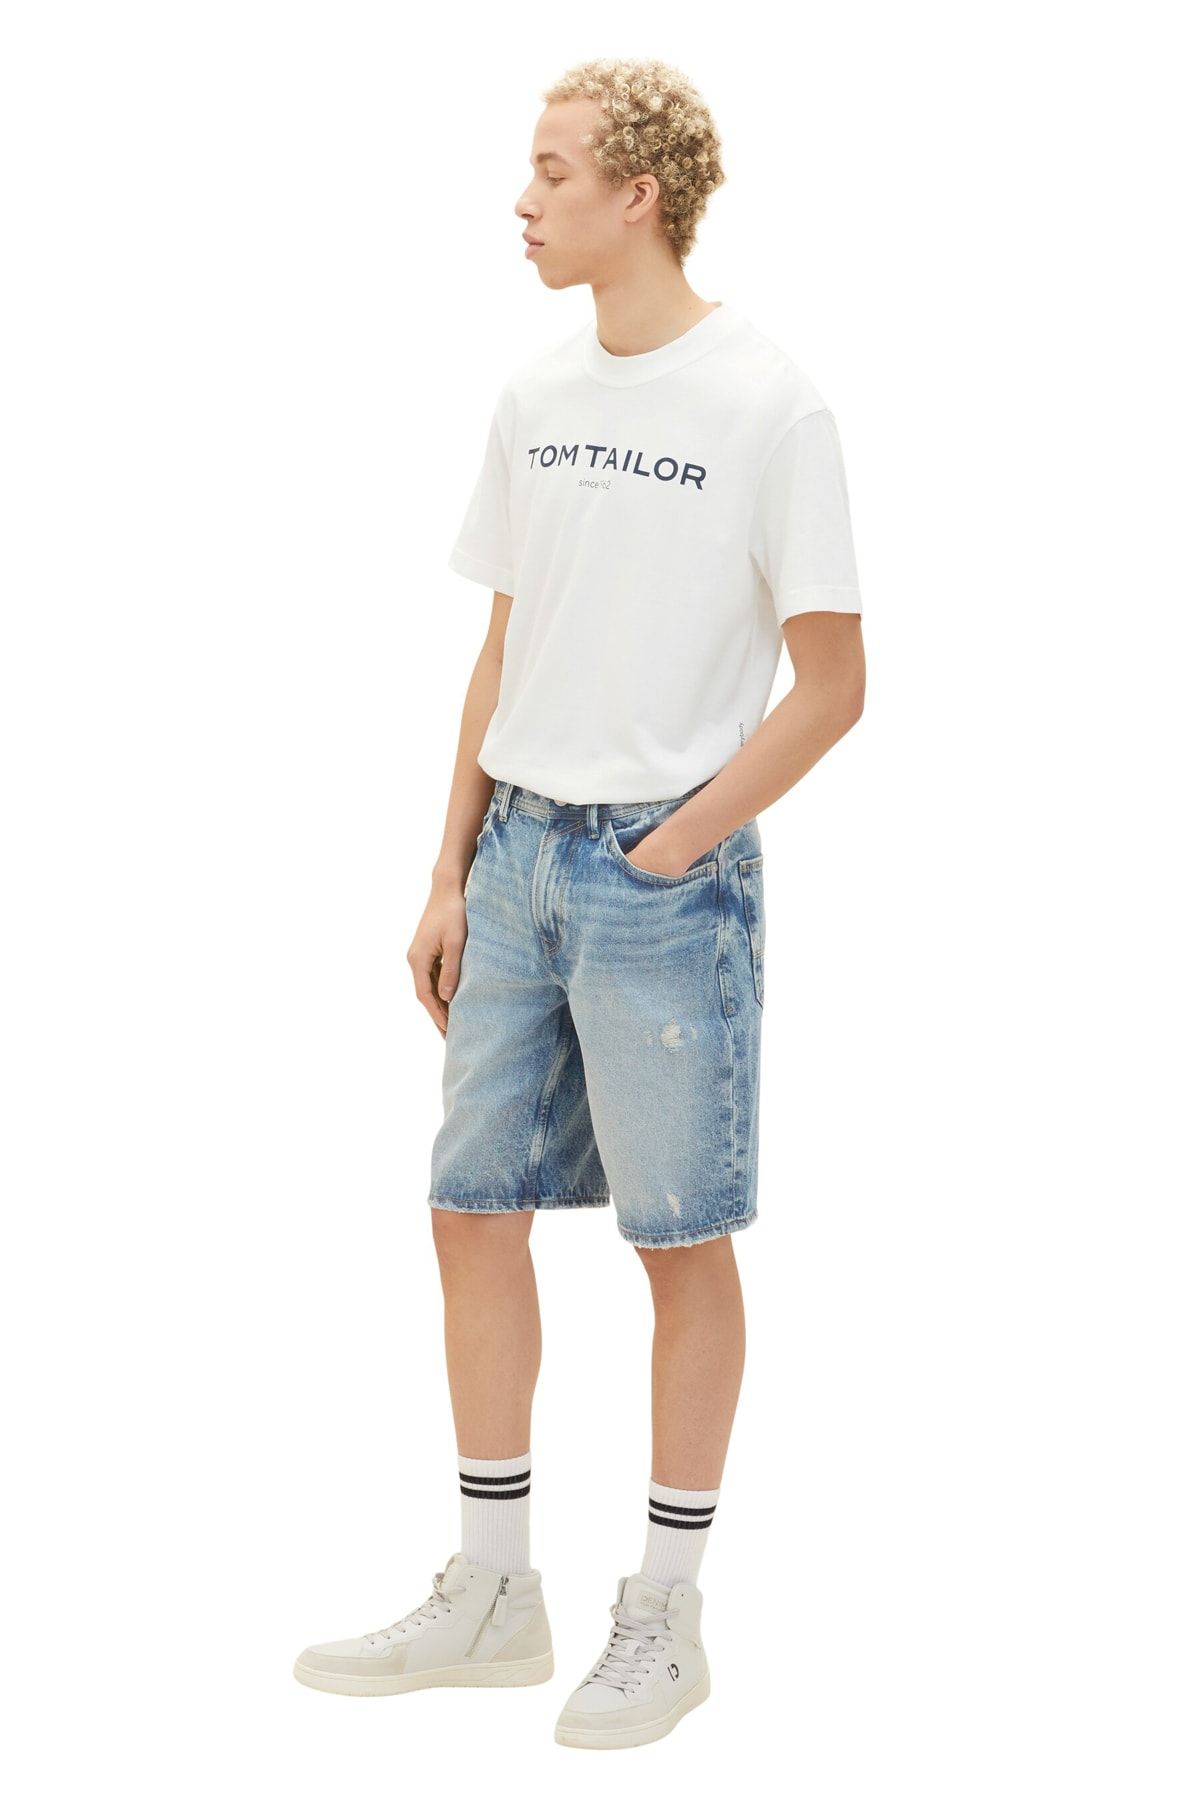 Tom Tailor Denim Shorts - Trendyol - - Gray Normal Waist